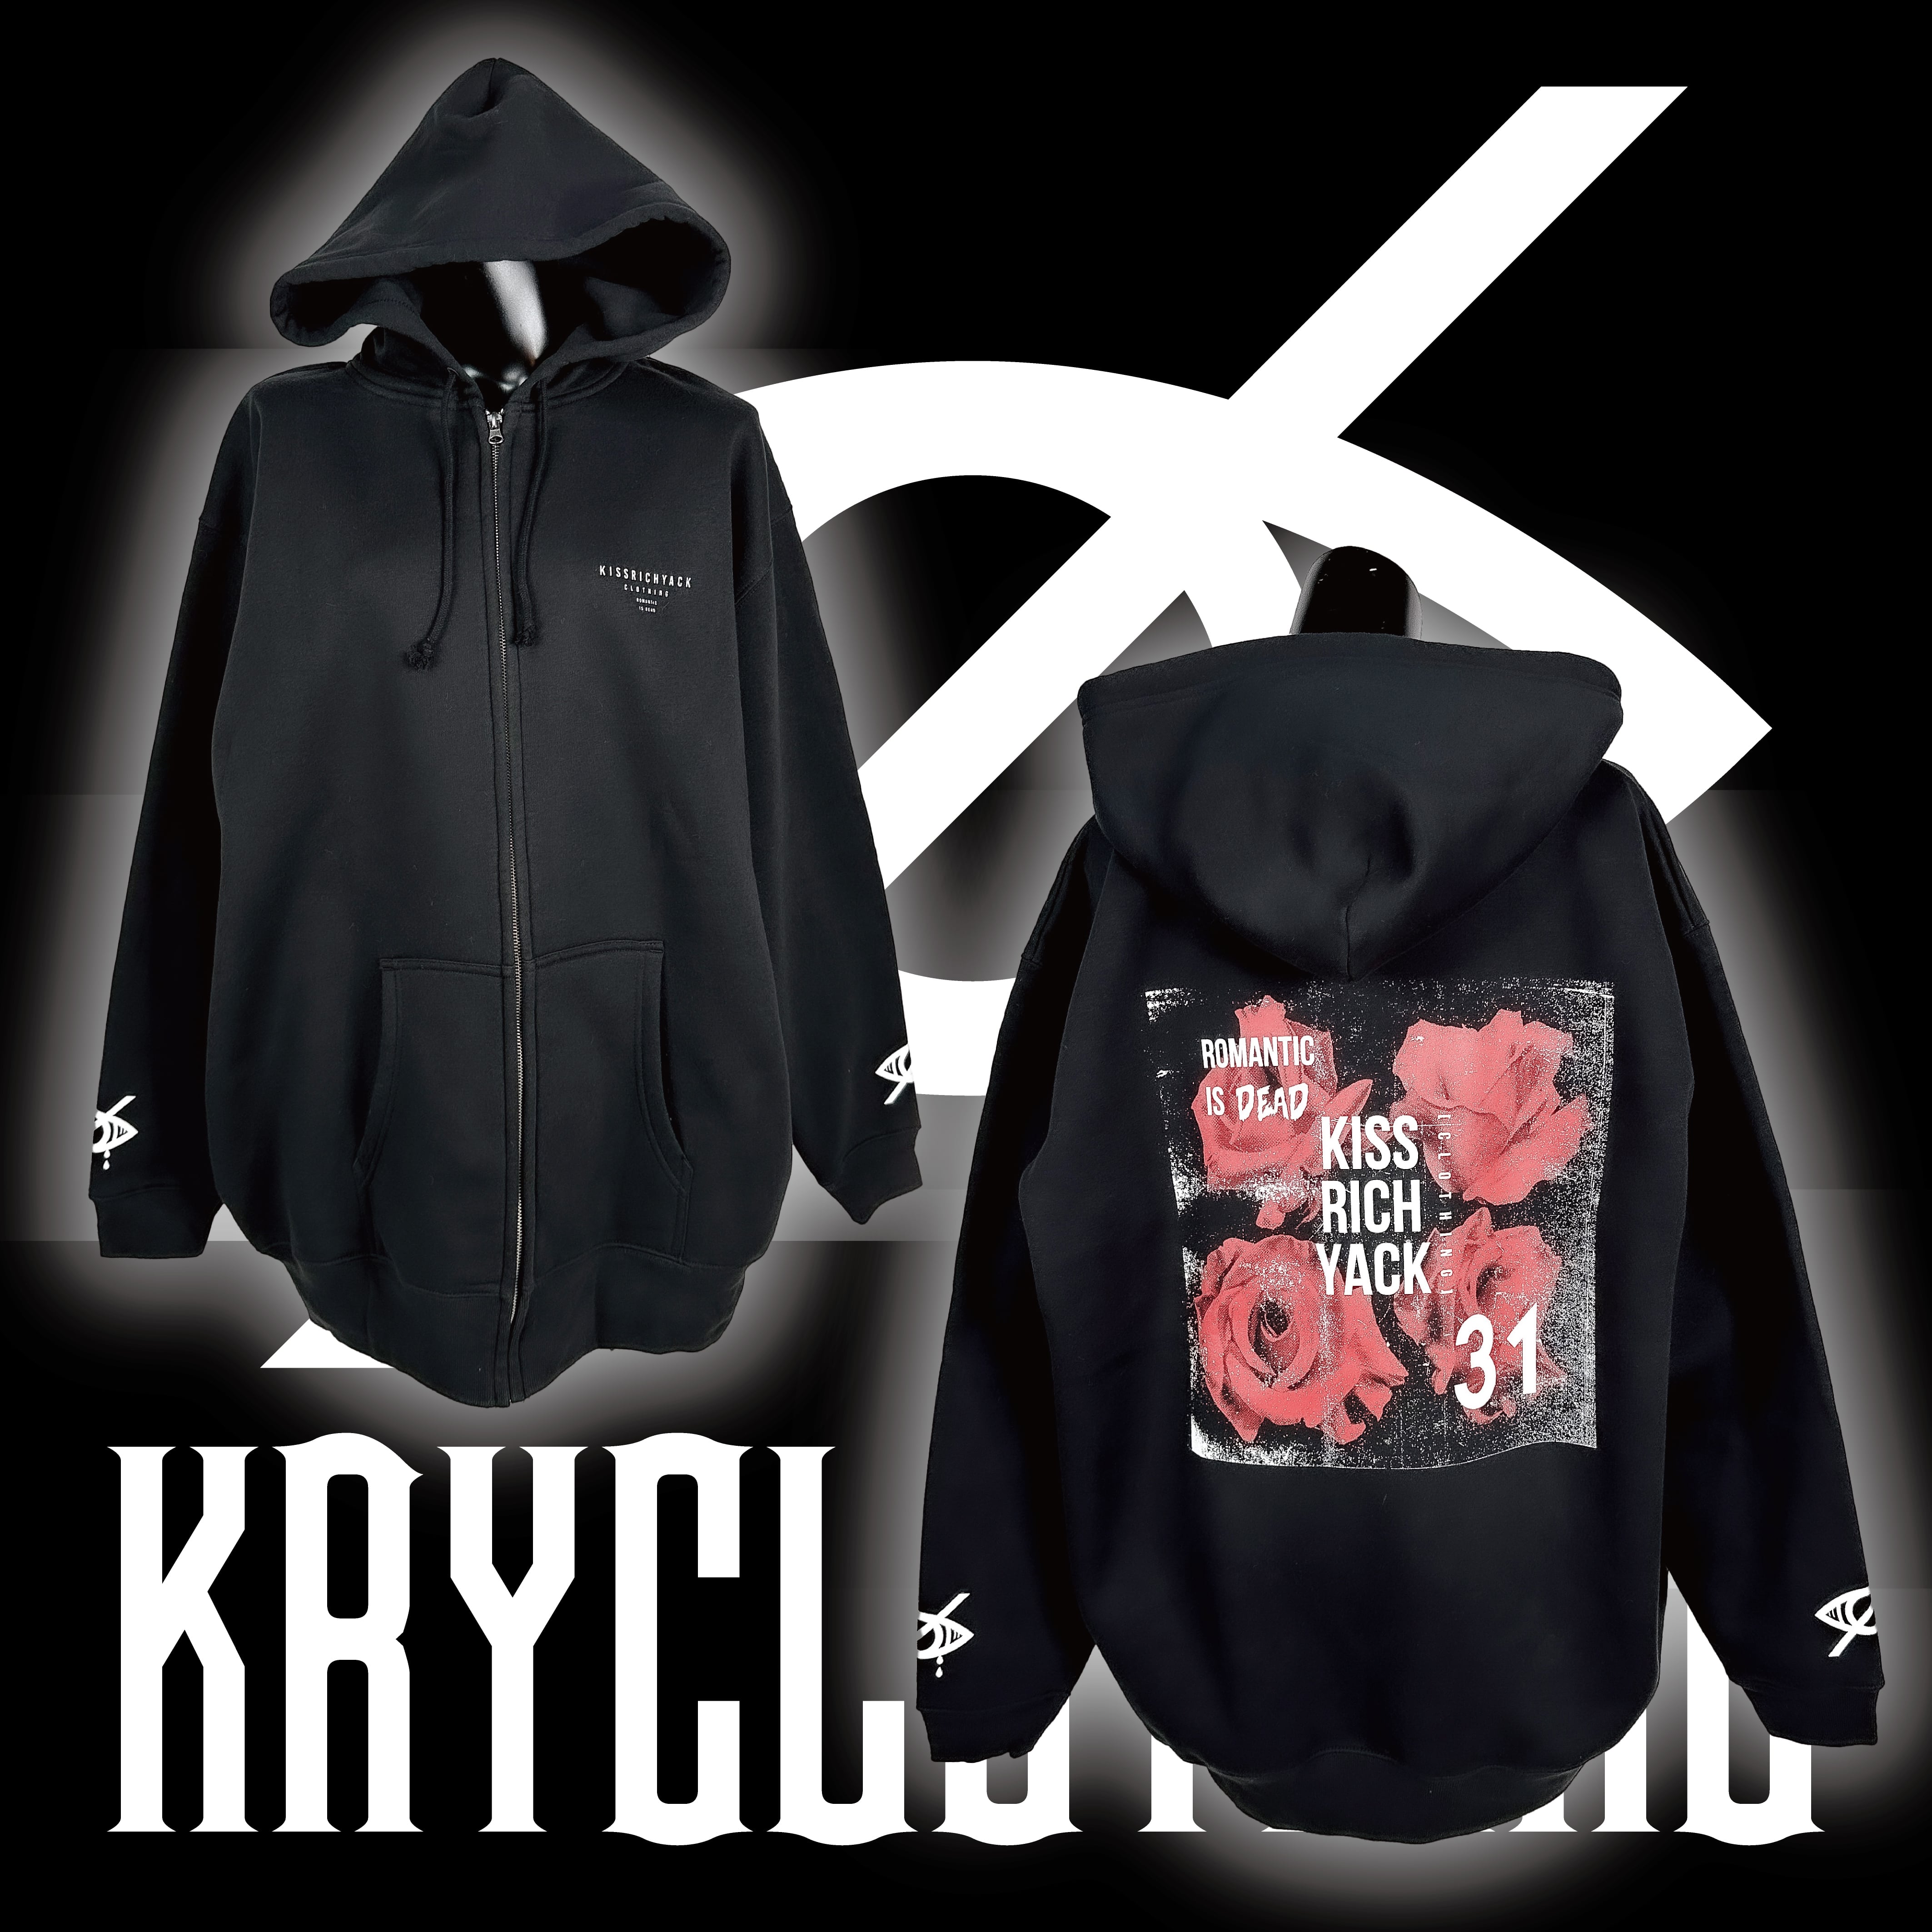 「RMIS」 | KRY clothing powered by BASE